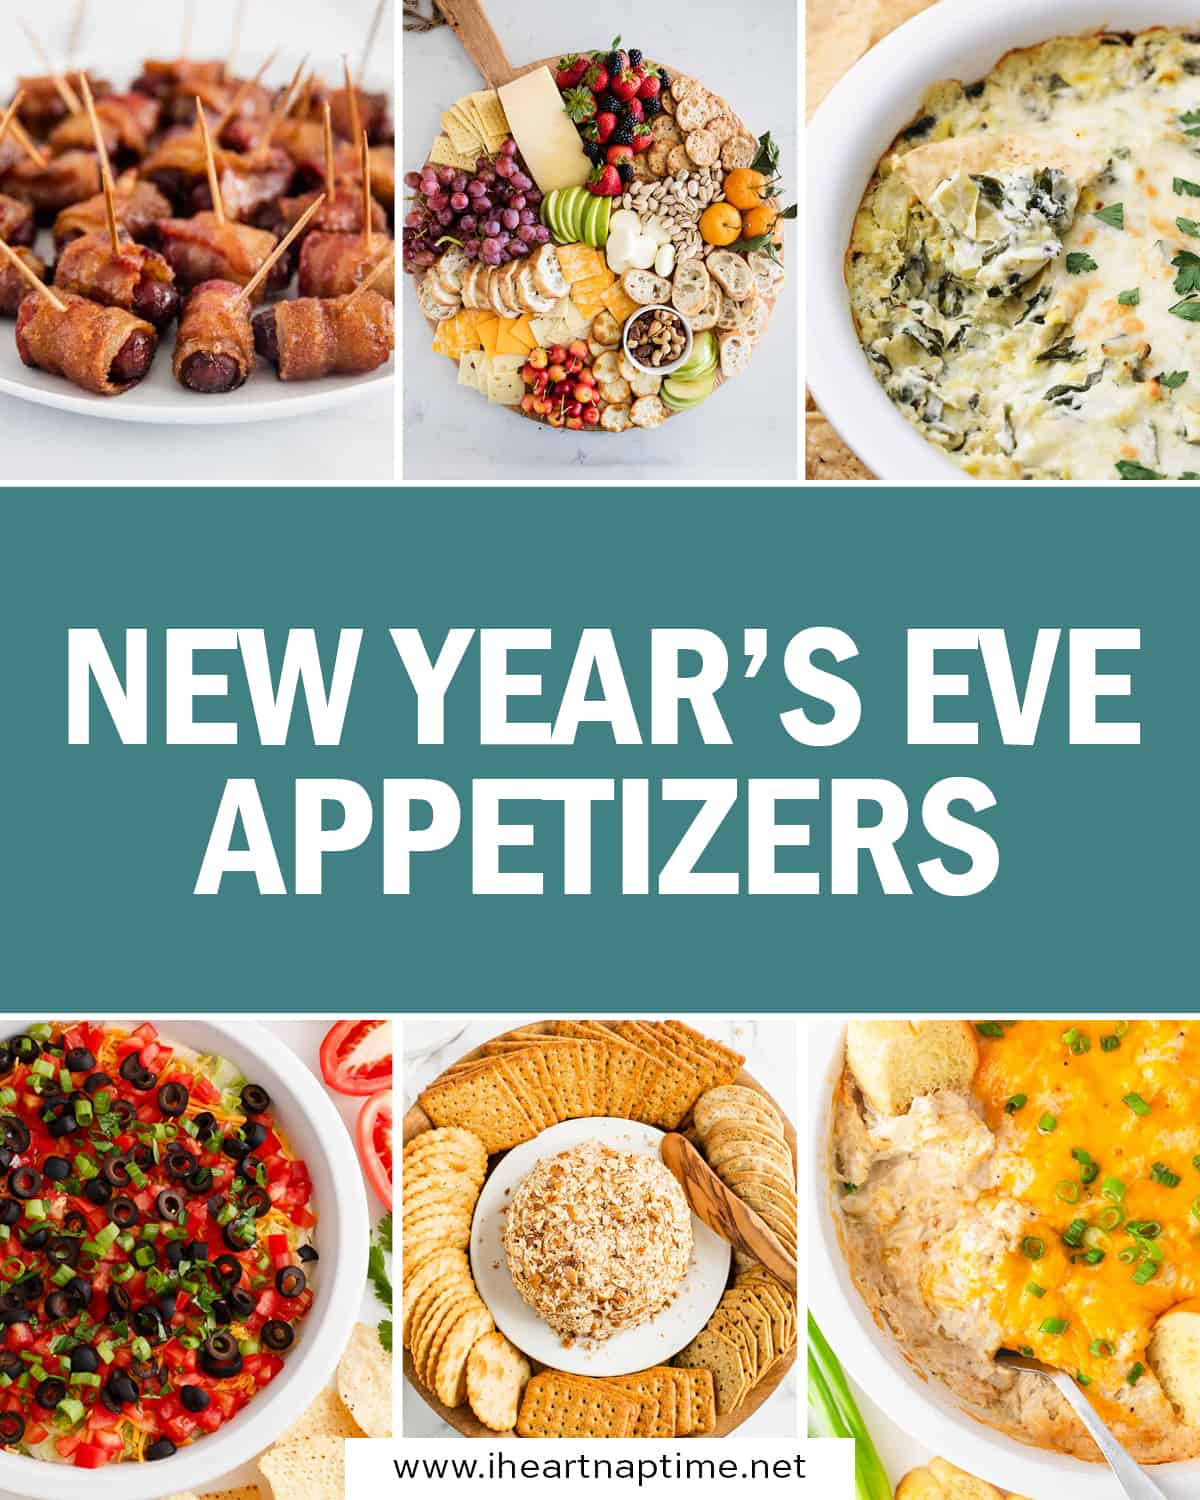 https://www.iheartnaptime.net/wp-content/uploads/2022/12/New-Years-Eve-Appetizers.jpg